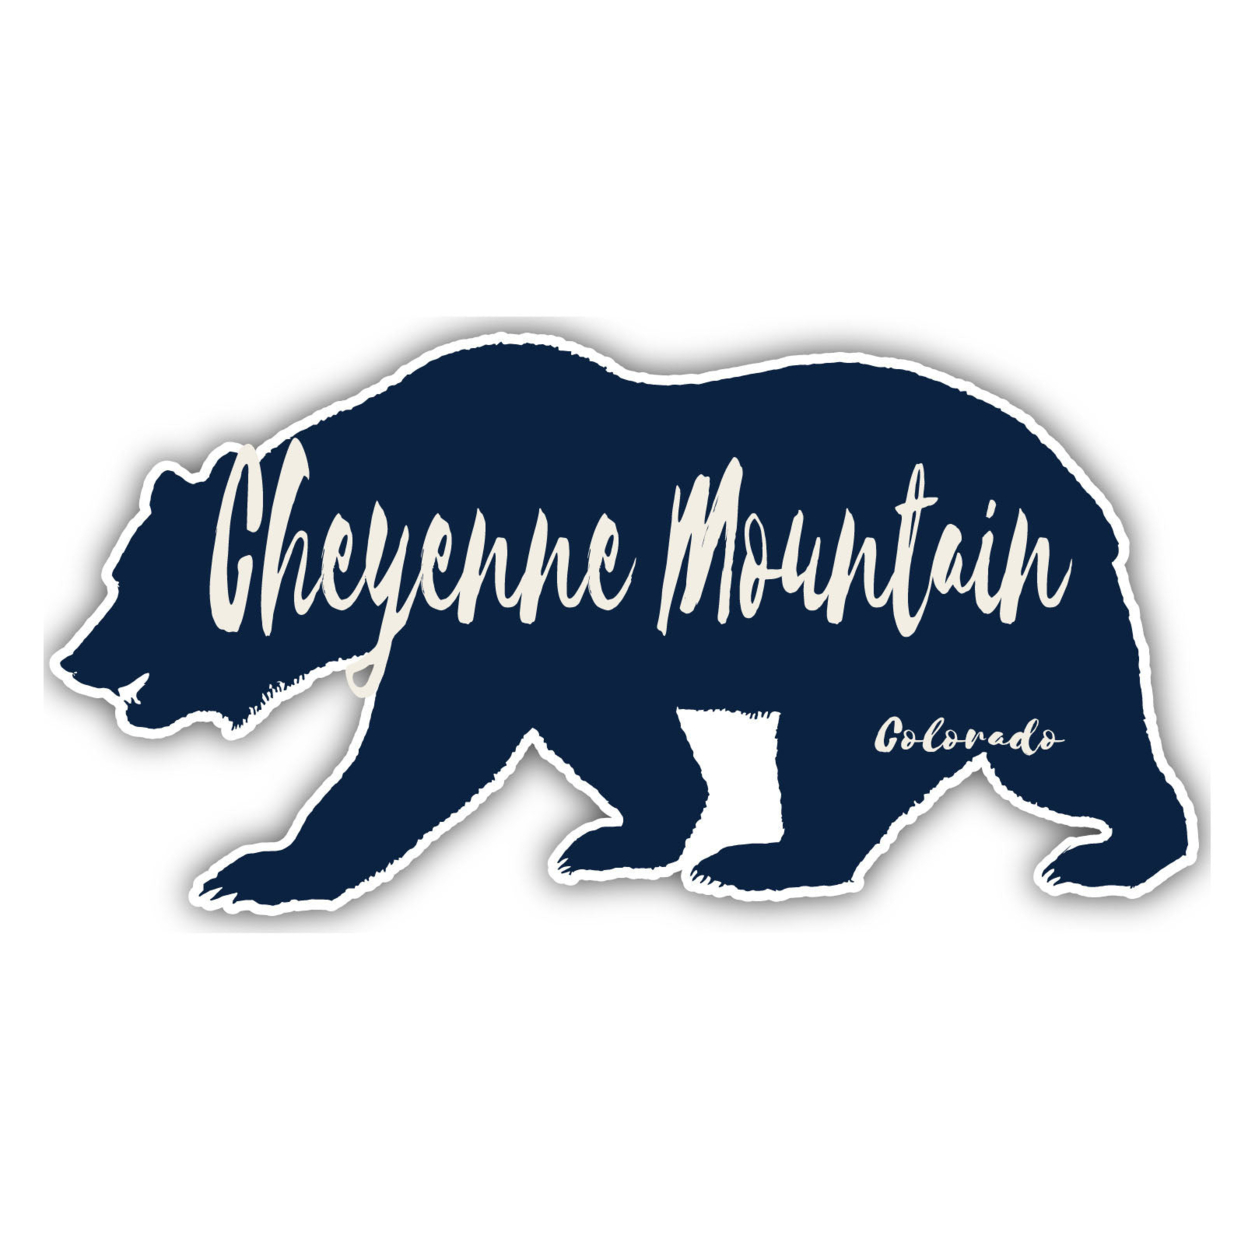 Cheyenne Mountain Colorado Souvenir Decorative Stickers (Choose Theme And Size) - Single Unit, 8-Inch, Bear